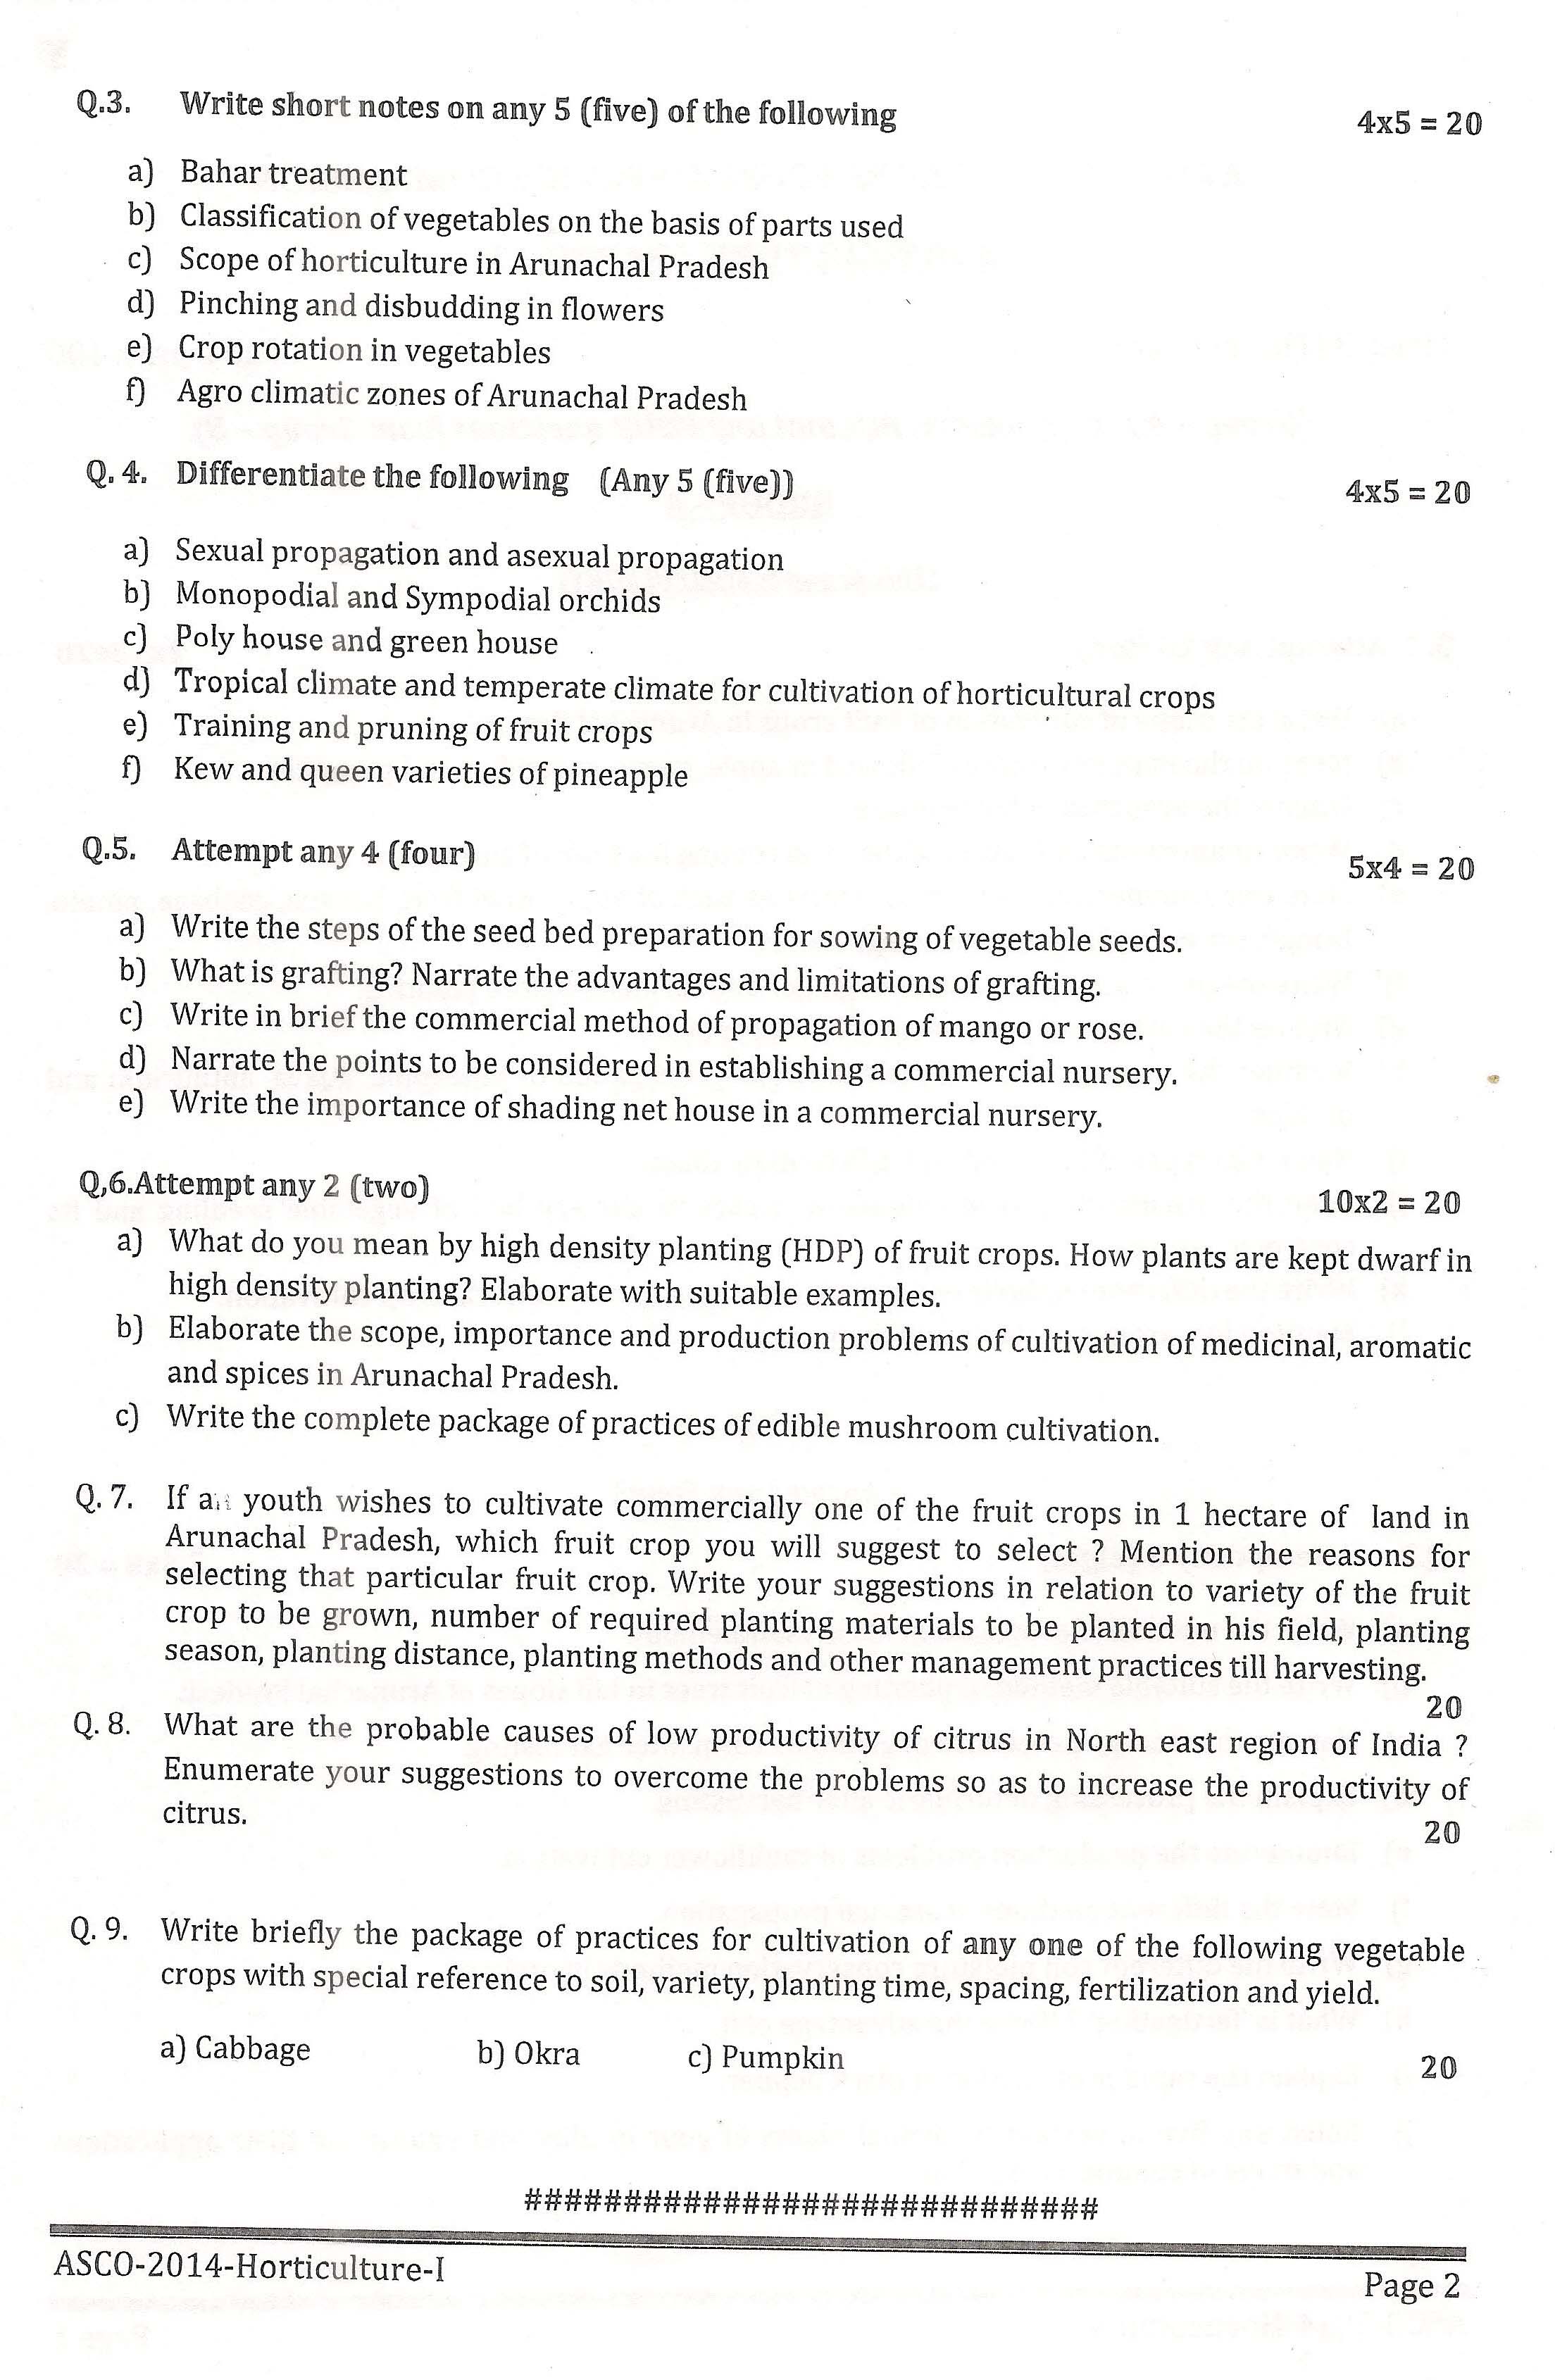 APPSC ASCO Horticulture Paper I Exam Question Paper 2014 2